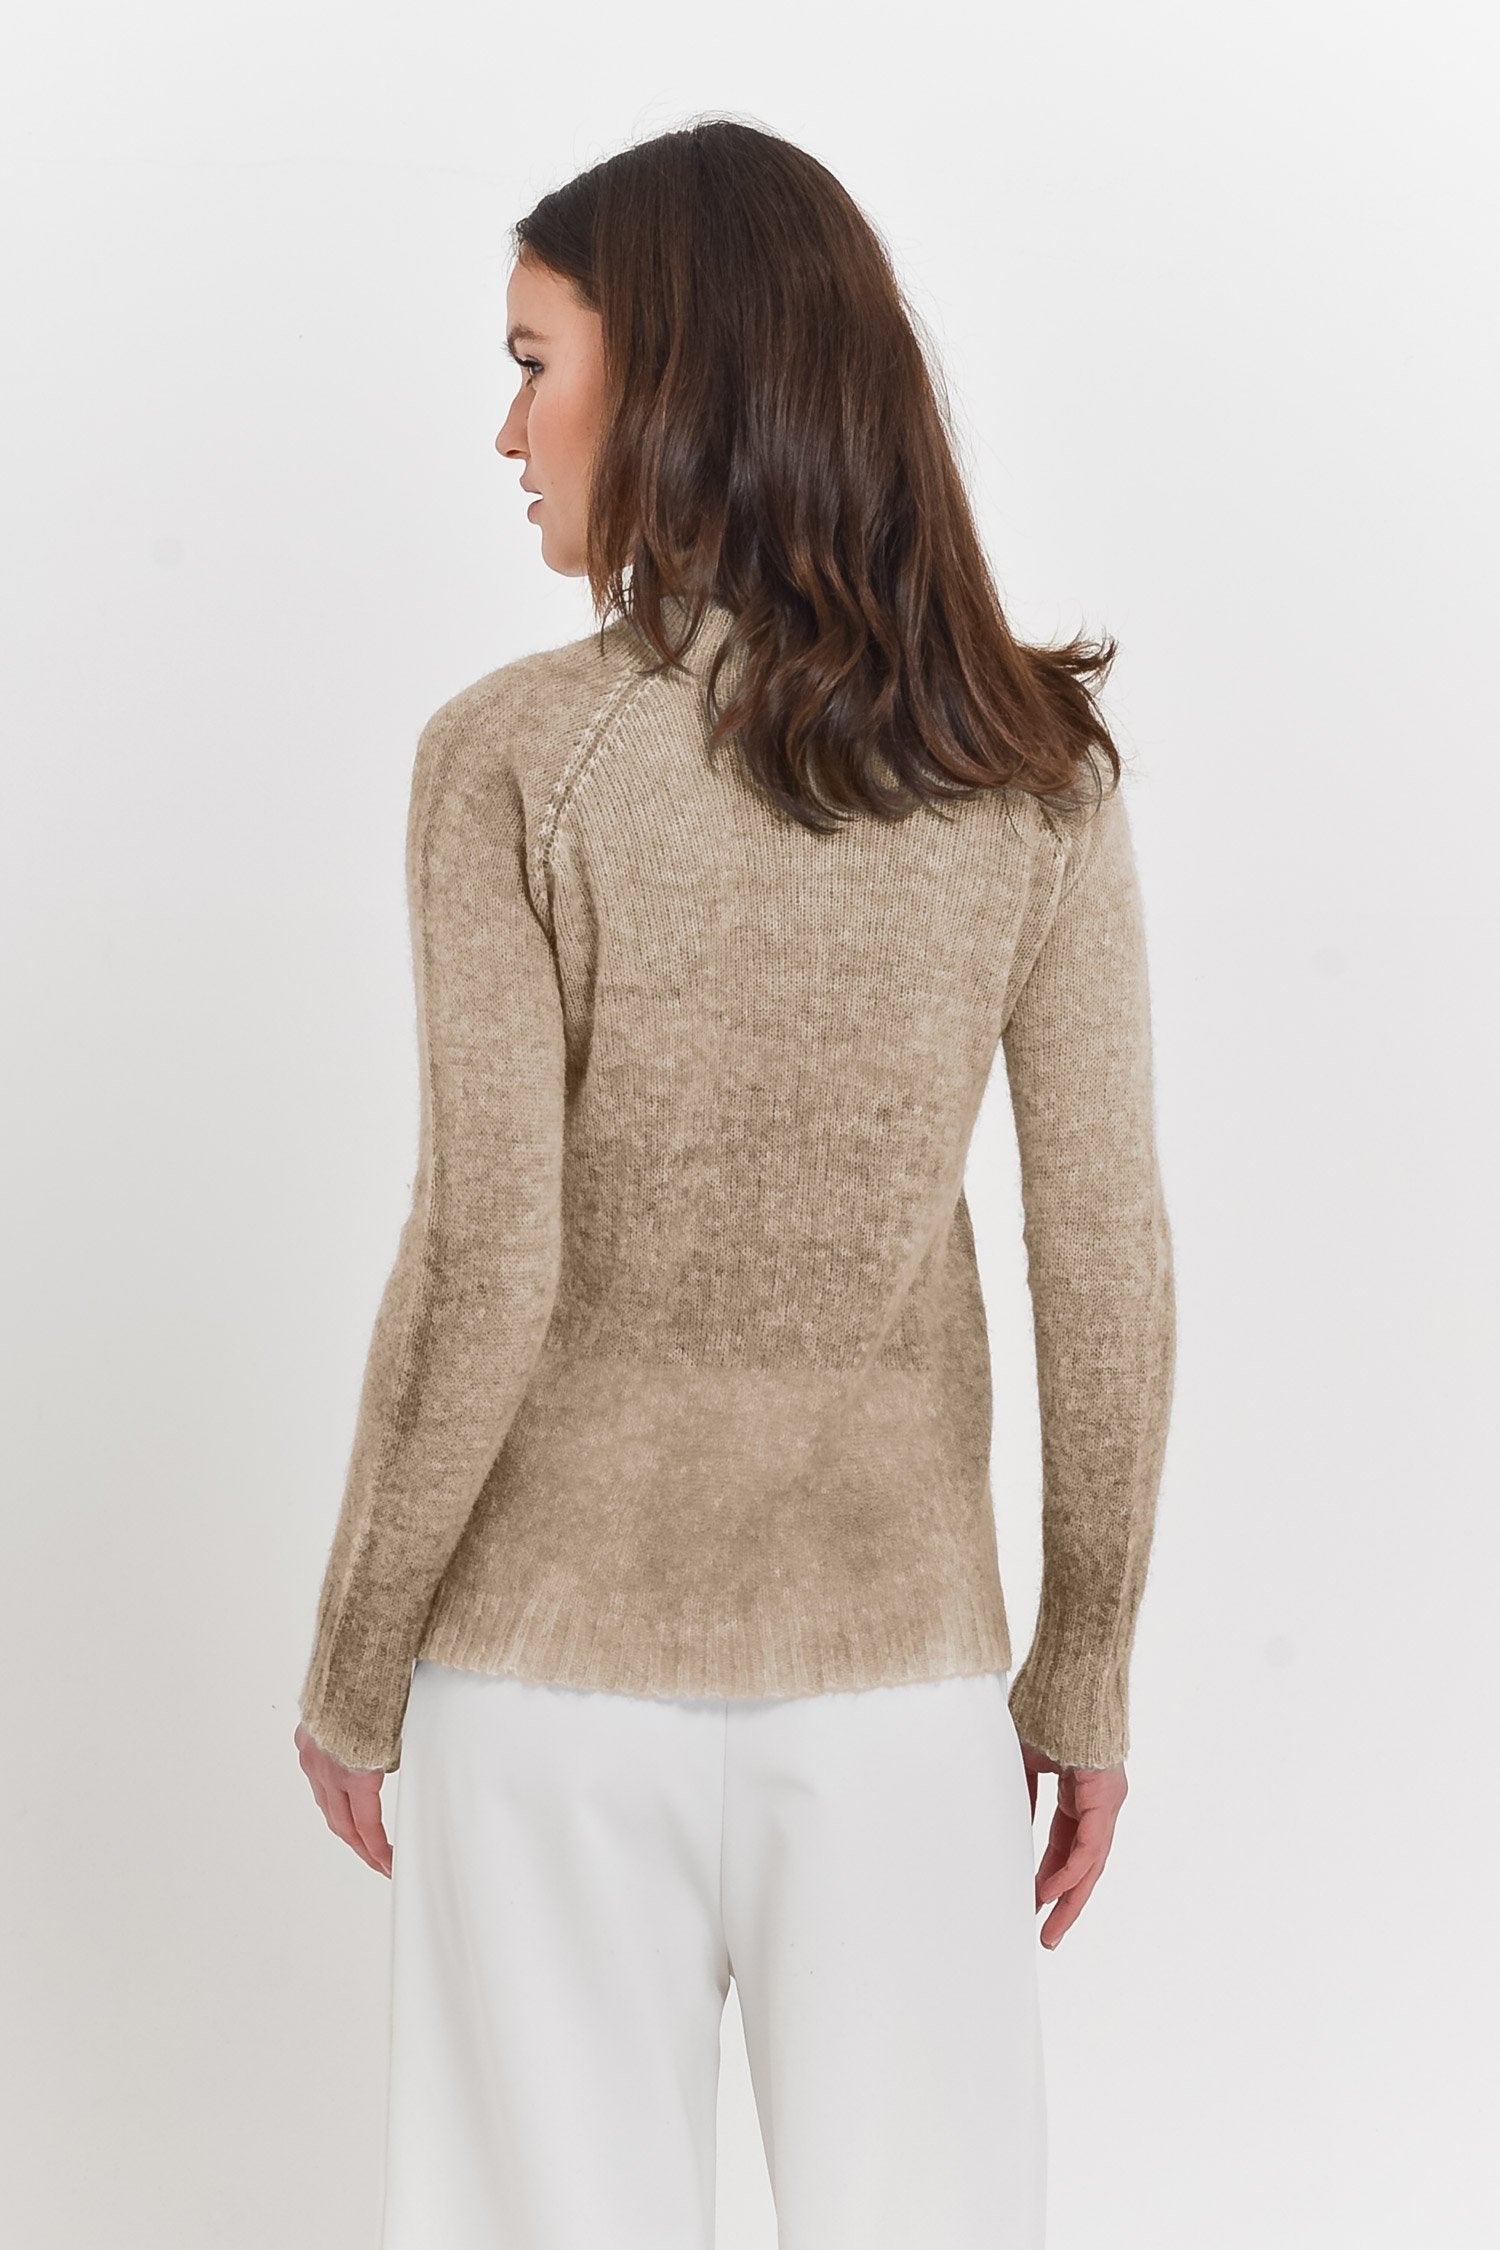 Millom Wood - Sweaters